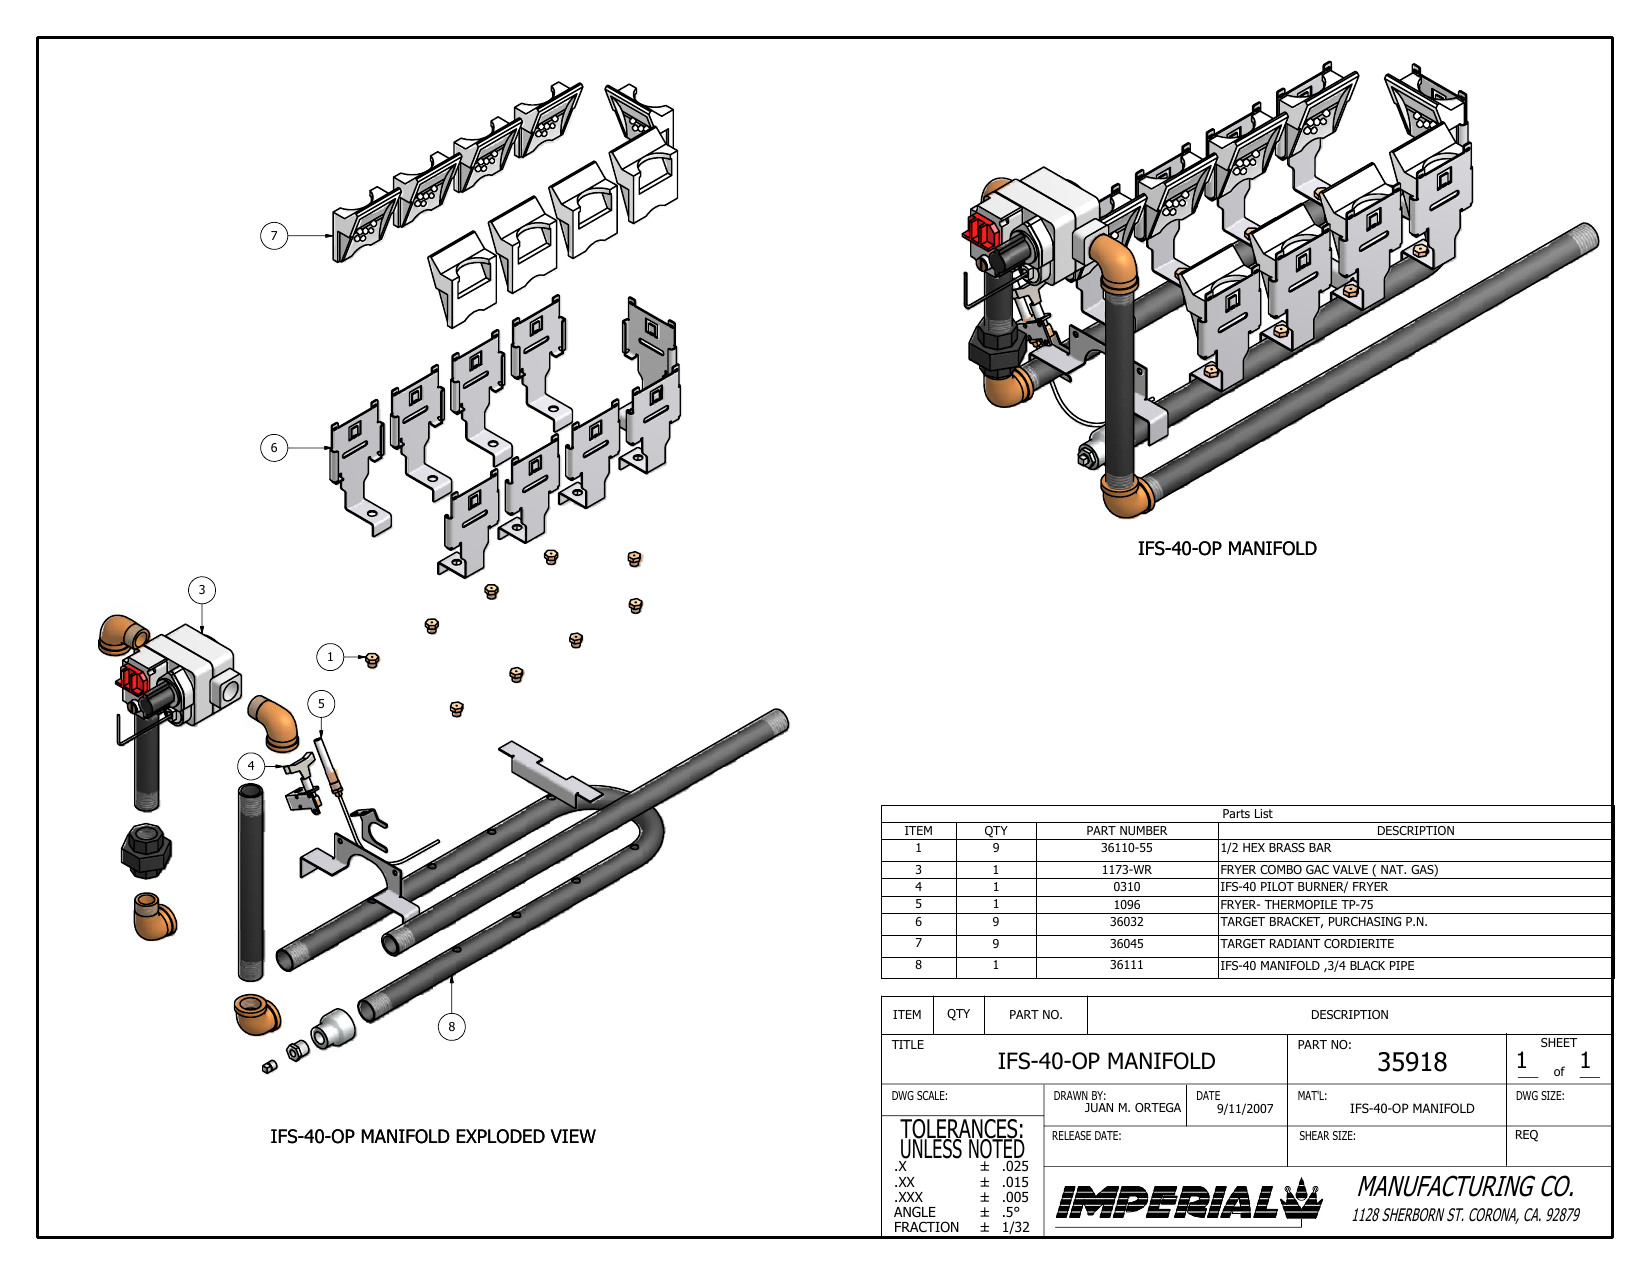 IMPERIAL 36212 GAS FRYER FENWAL SAFETY THERMOSTAT PROBE IFS-40-OP IFS-50-OP ETC 